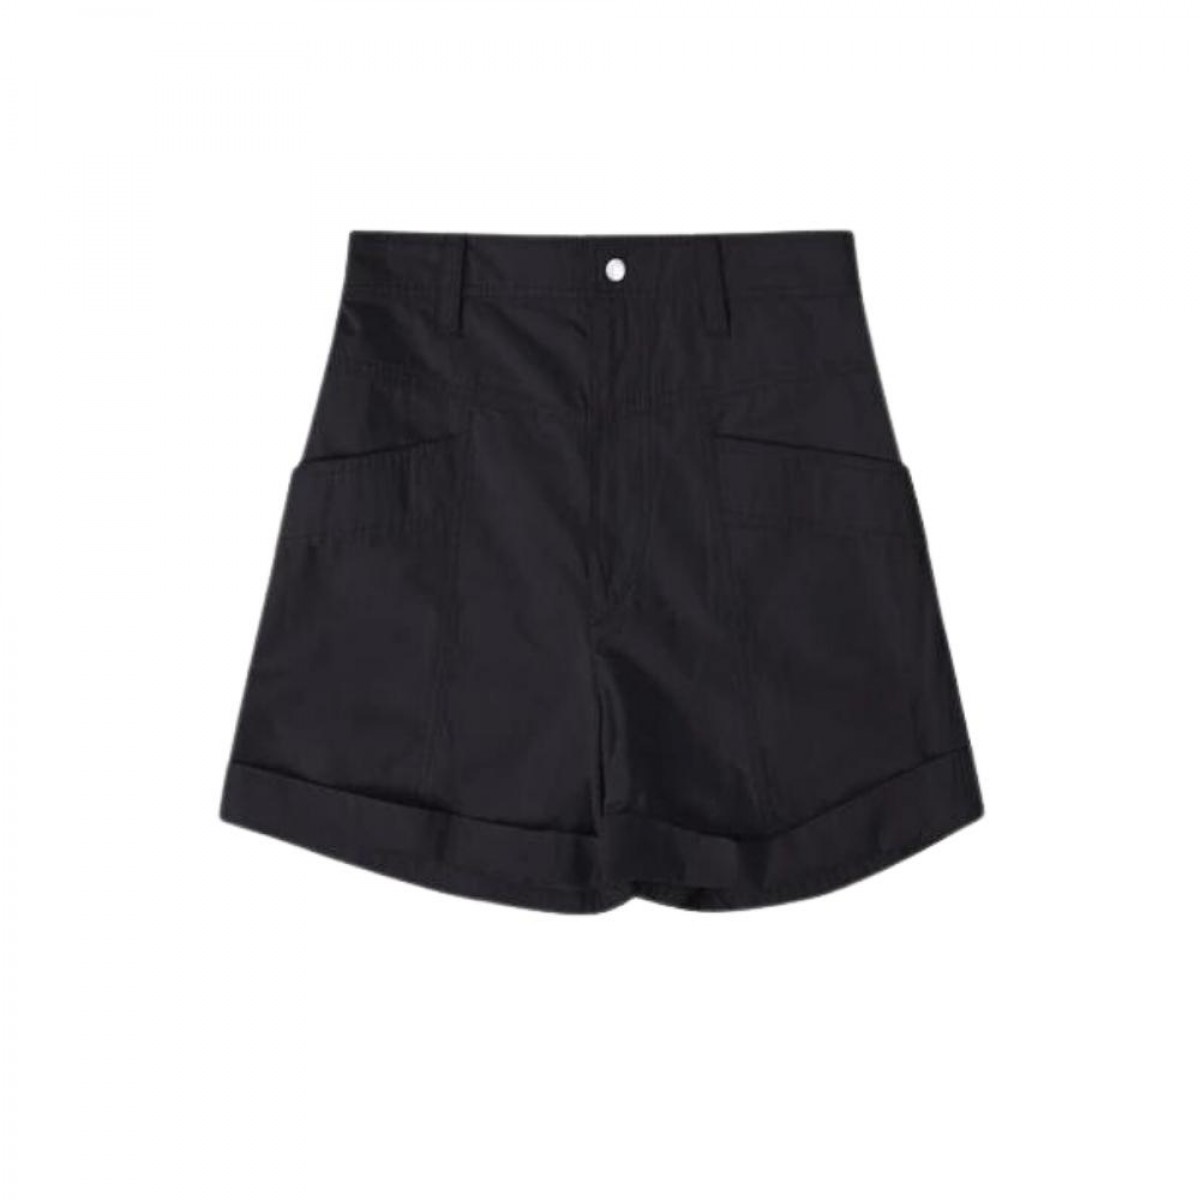 rachel shorts - faded black - front